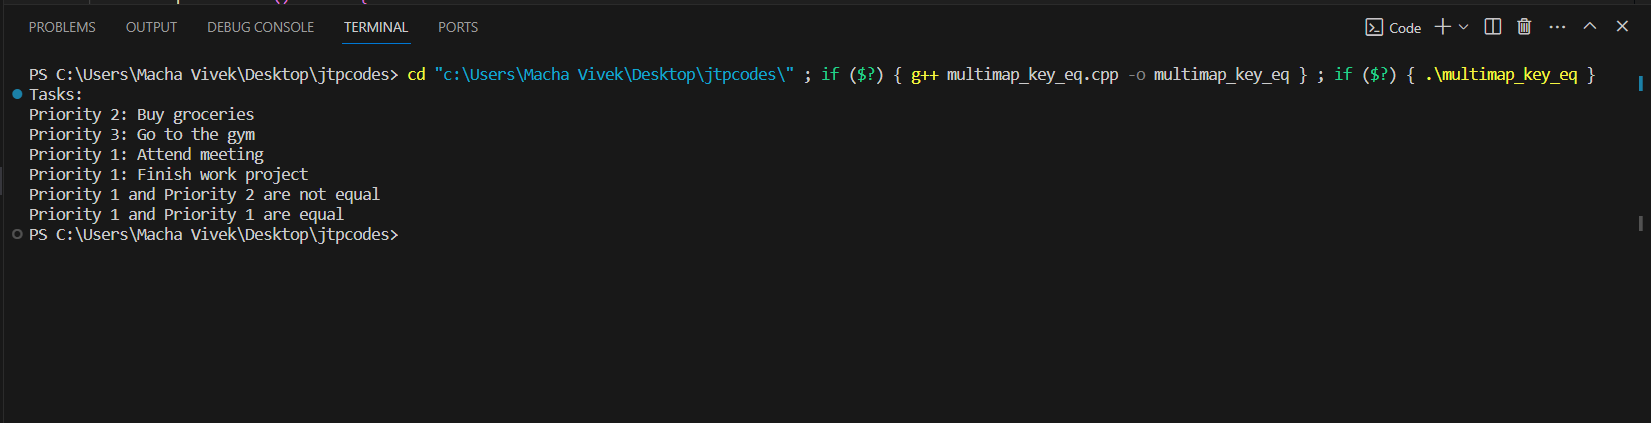 unordered_multimap key_eq function in C++